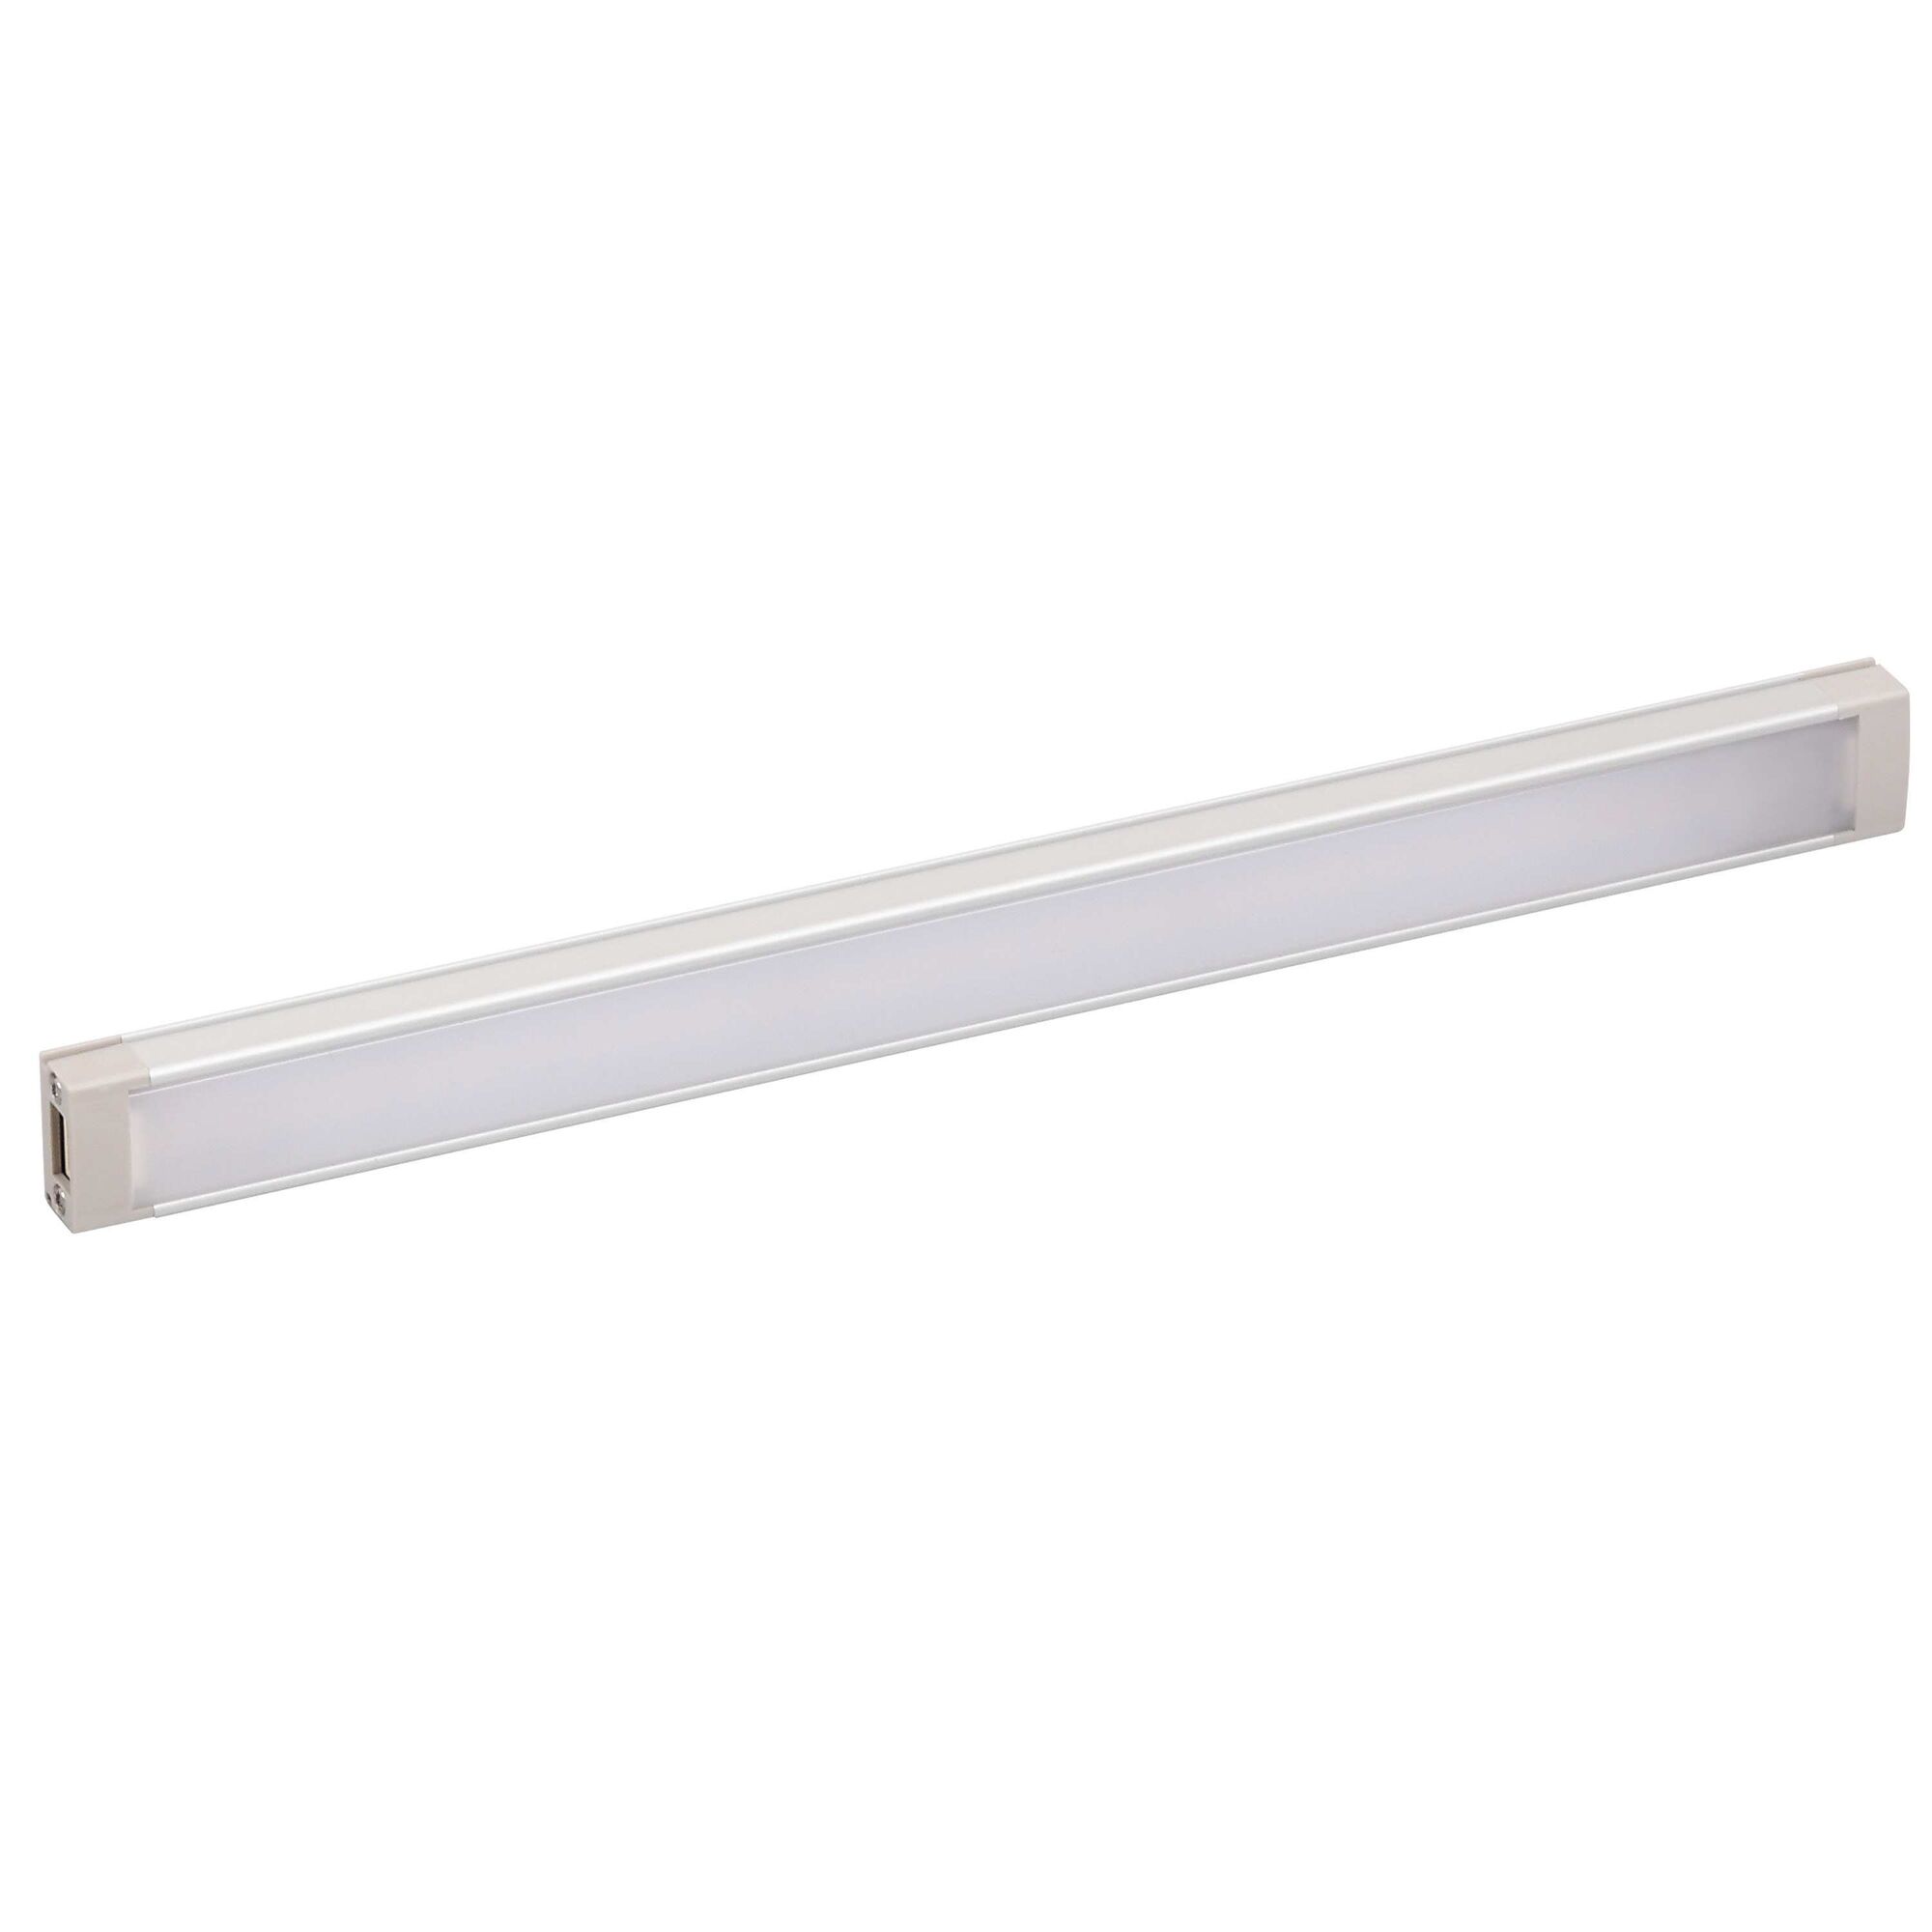 Profile of 1 bar L E D under cabinet lighting accessory light warm white 9 inch.